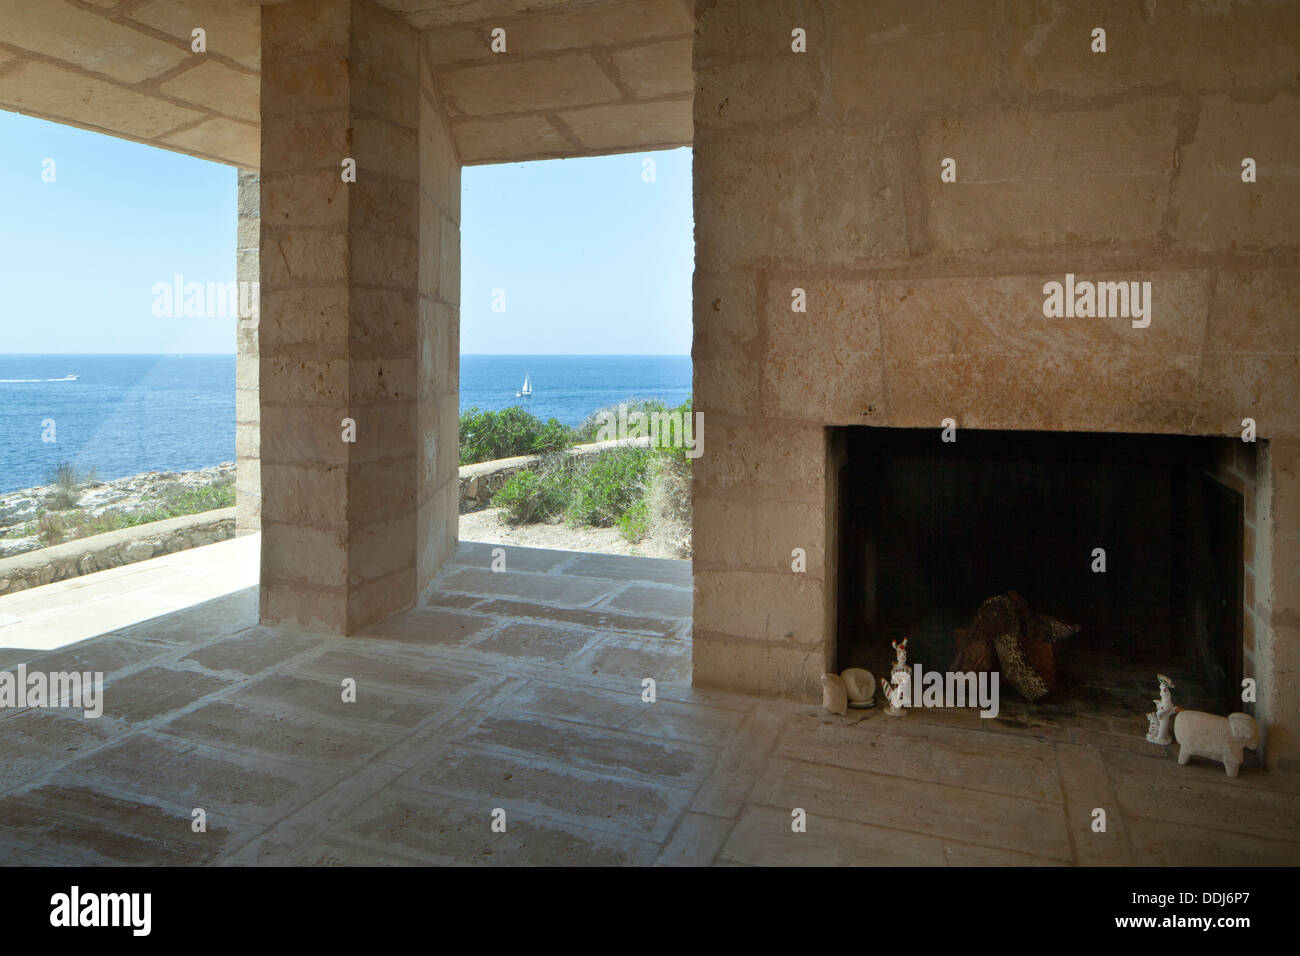 Kann Lis, Mallorca, Spanien. Architekt: Utzon, Jorn, 1971. Wohnzimmer, "rahmenlose" Fenster, Blick auf Meer. Kamin. Stockfoto